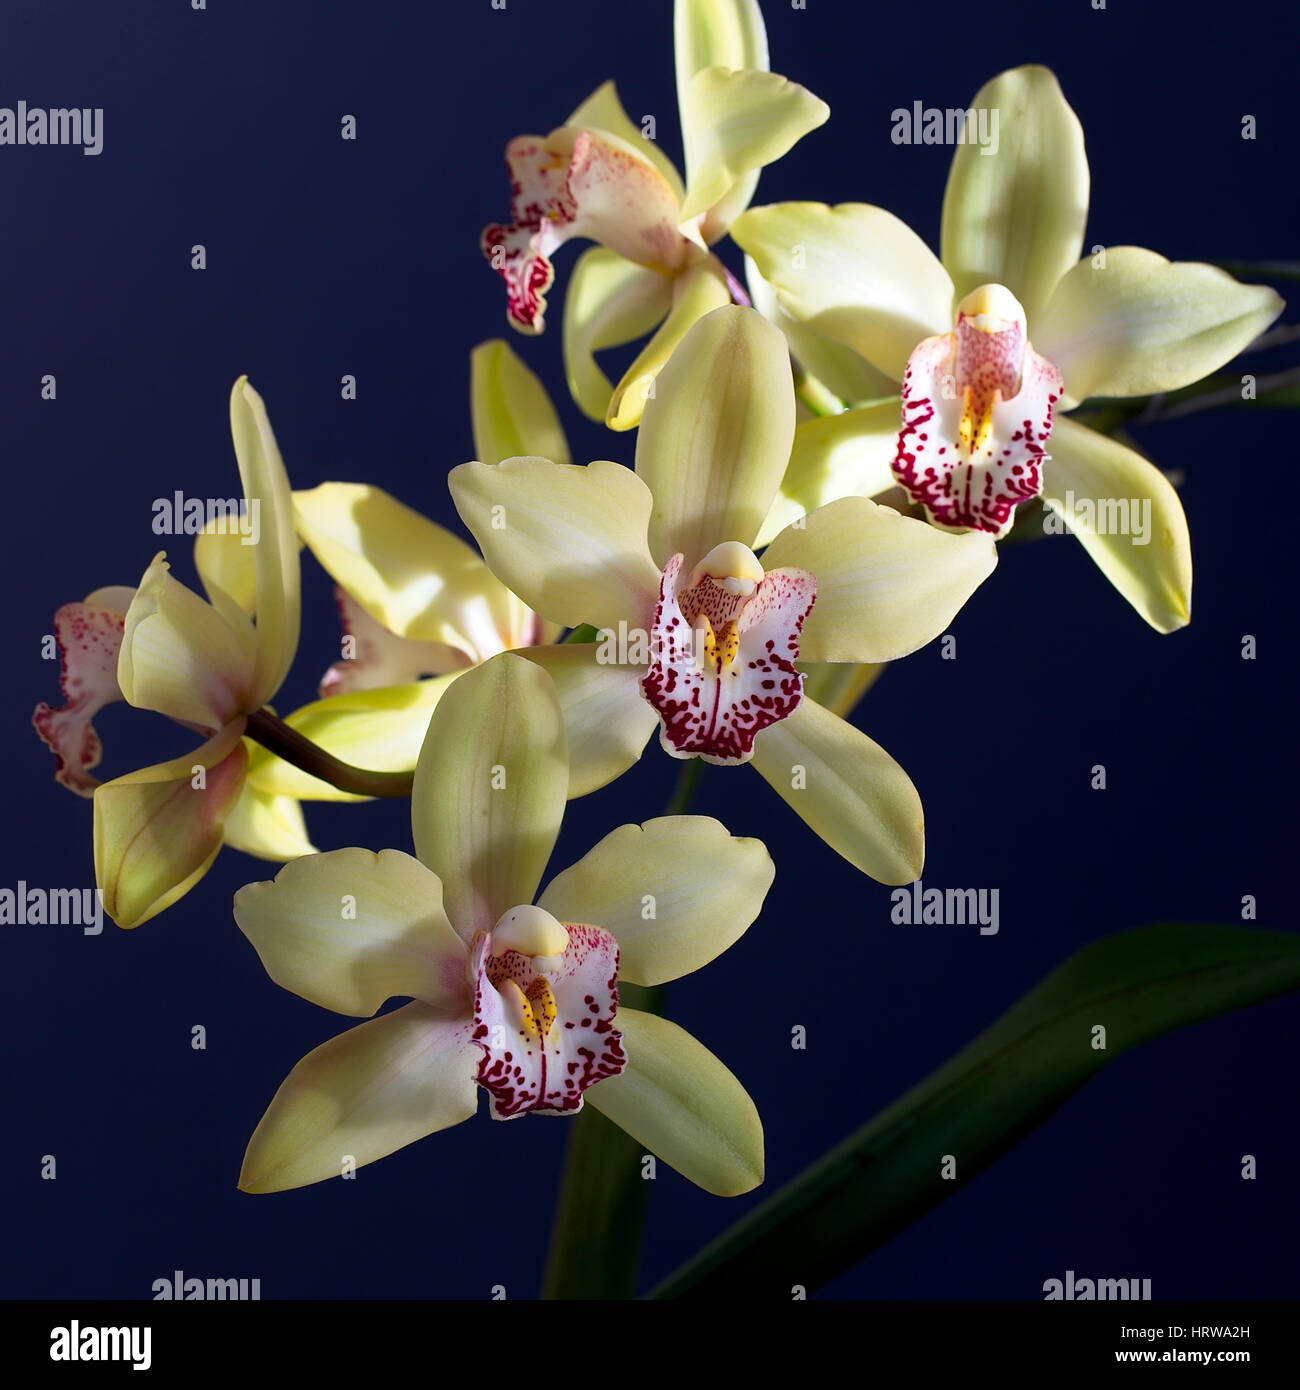 Cymbidium or Boat orchid flowers, Cornwall, England, UK. Stock Photo